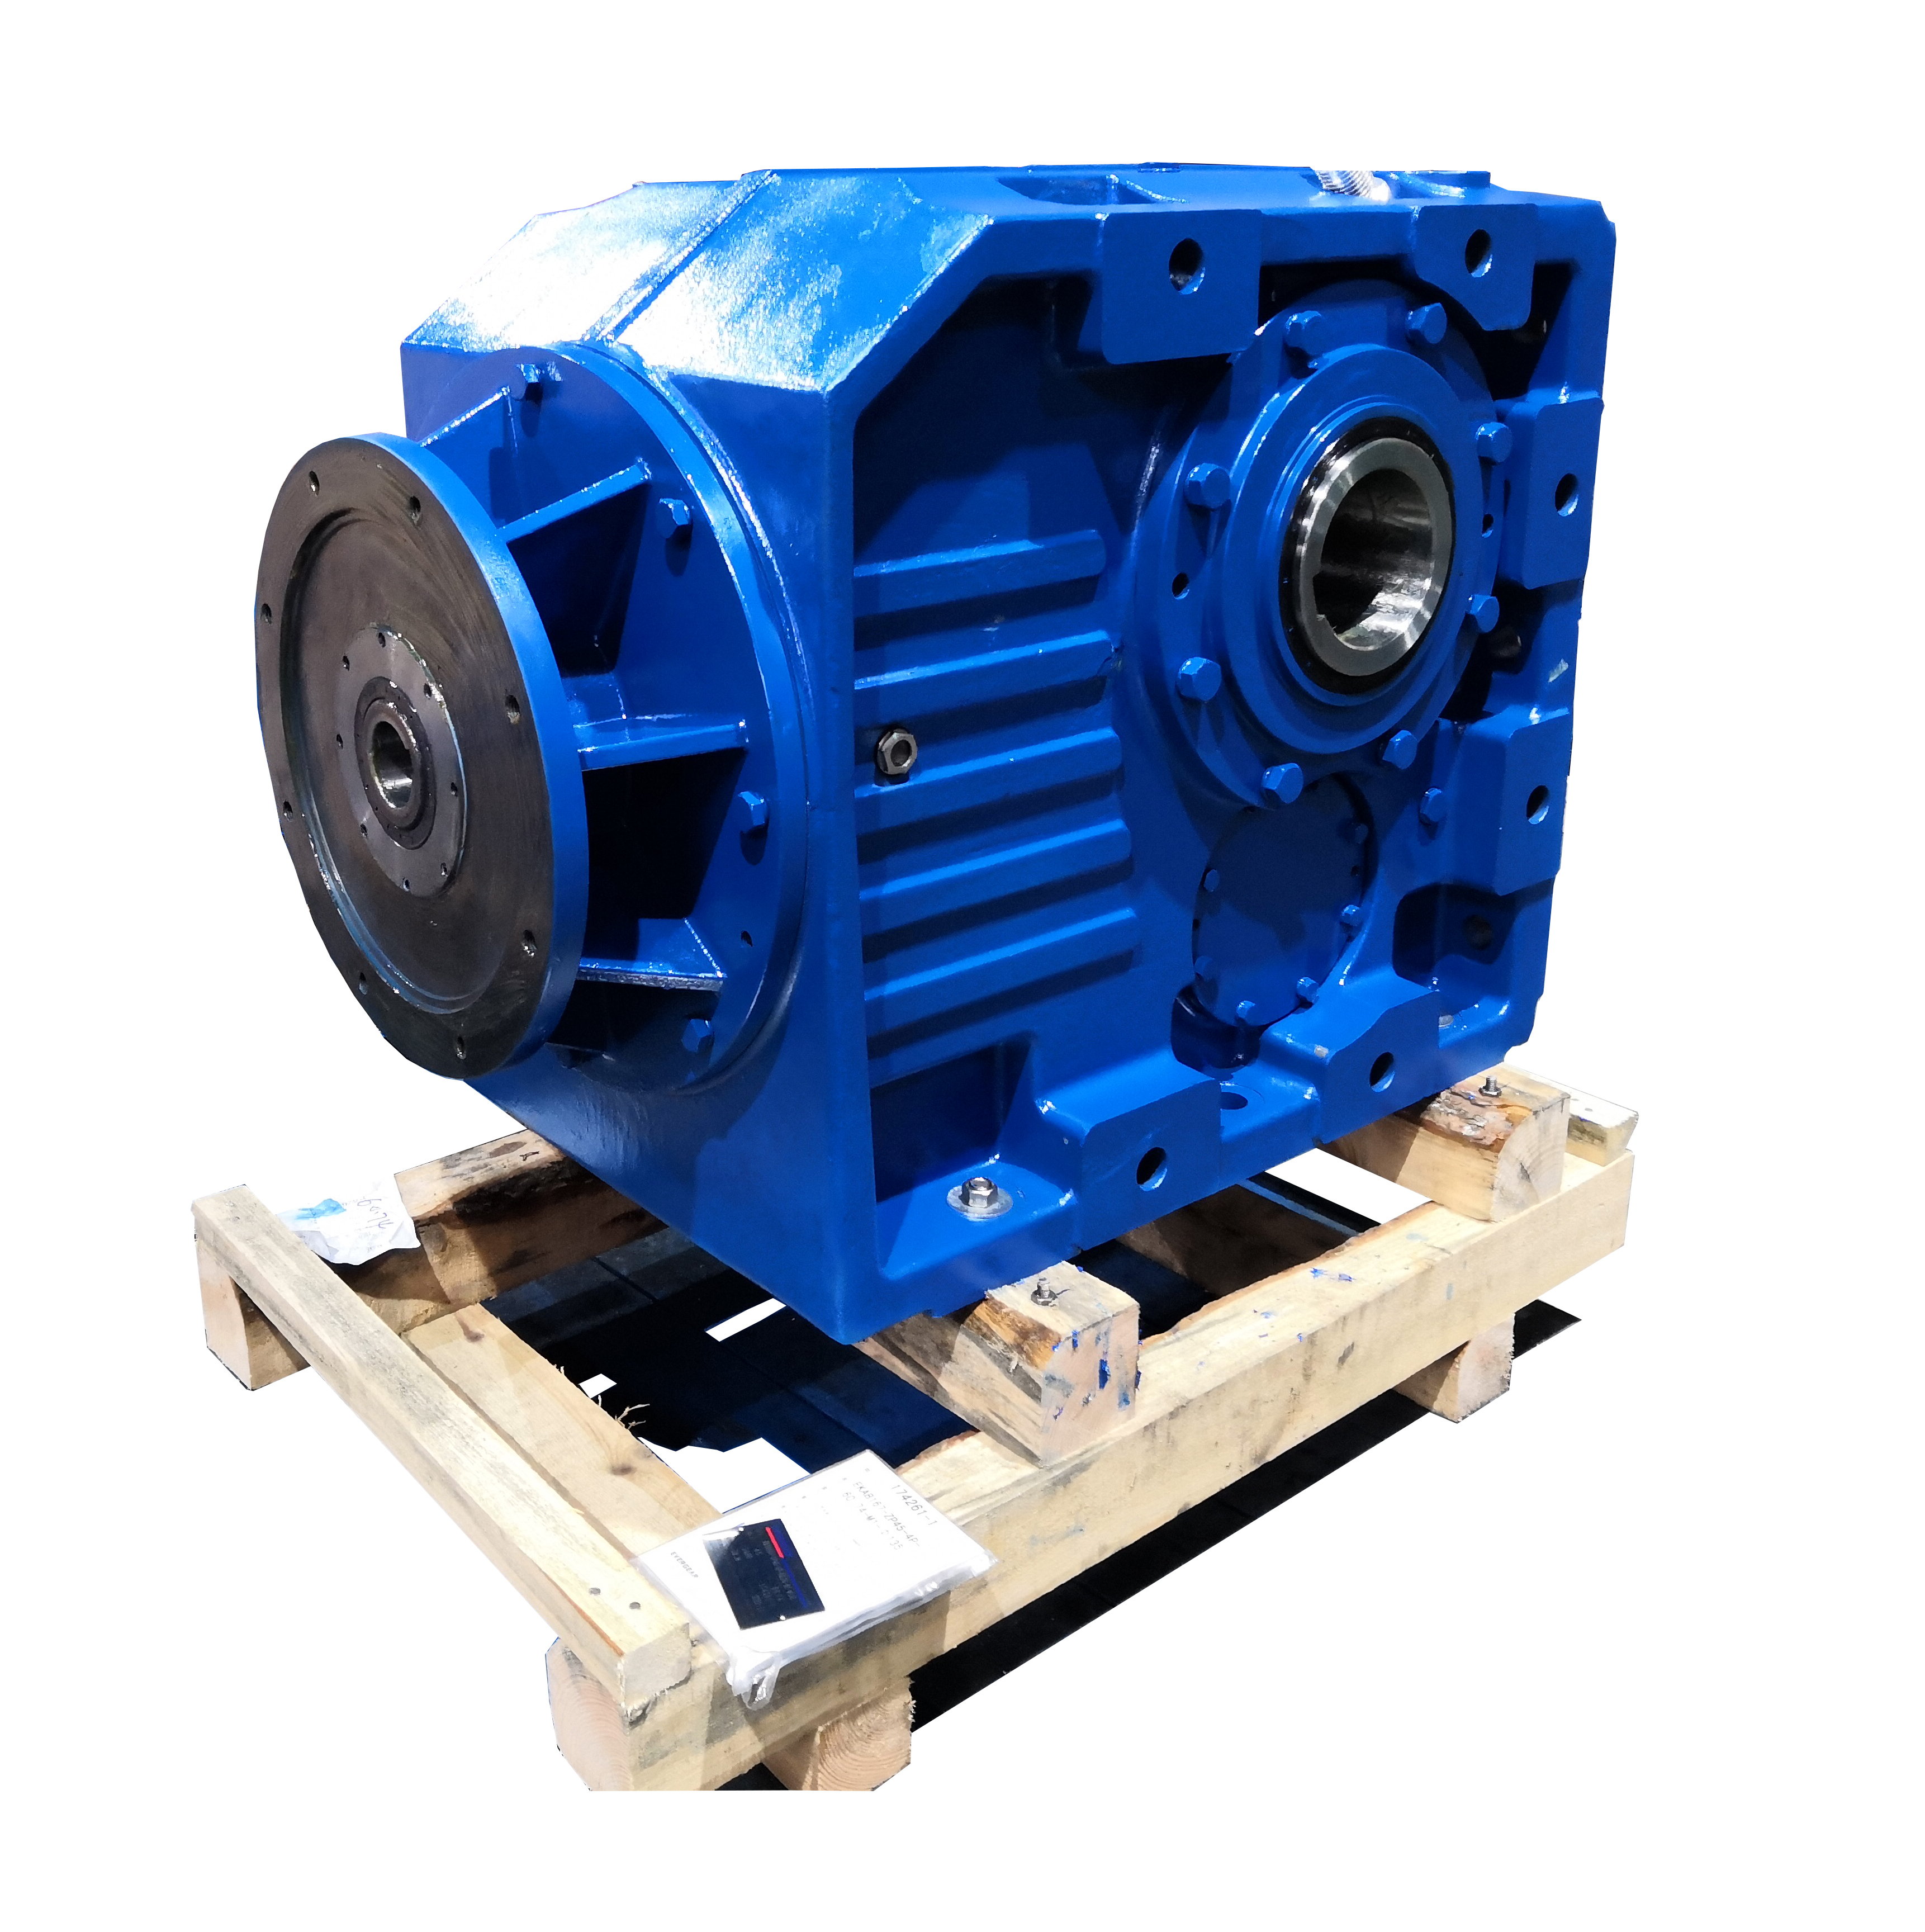 EVERGEAR K series 240v electric motor gearbox 35mm hollow shaft gear reducer